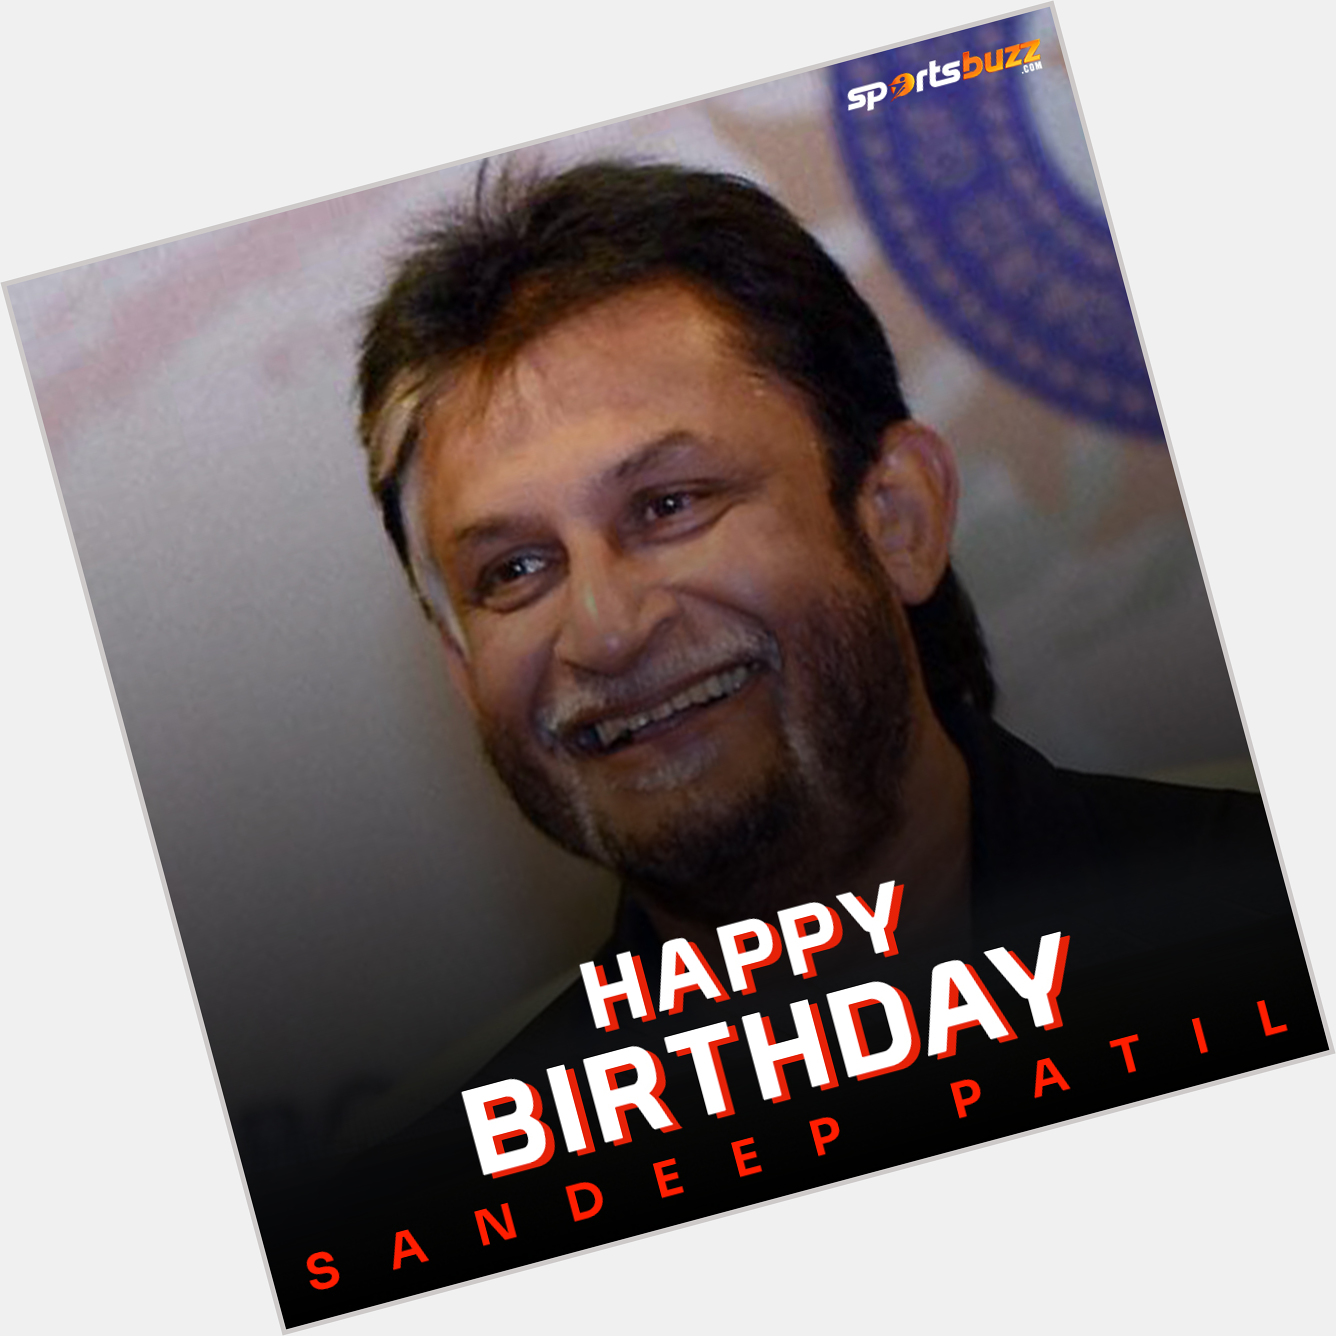 Happy Birthday Sandeep Patil.
( - BCCI) 